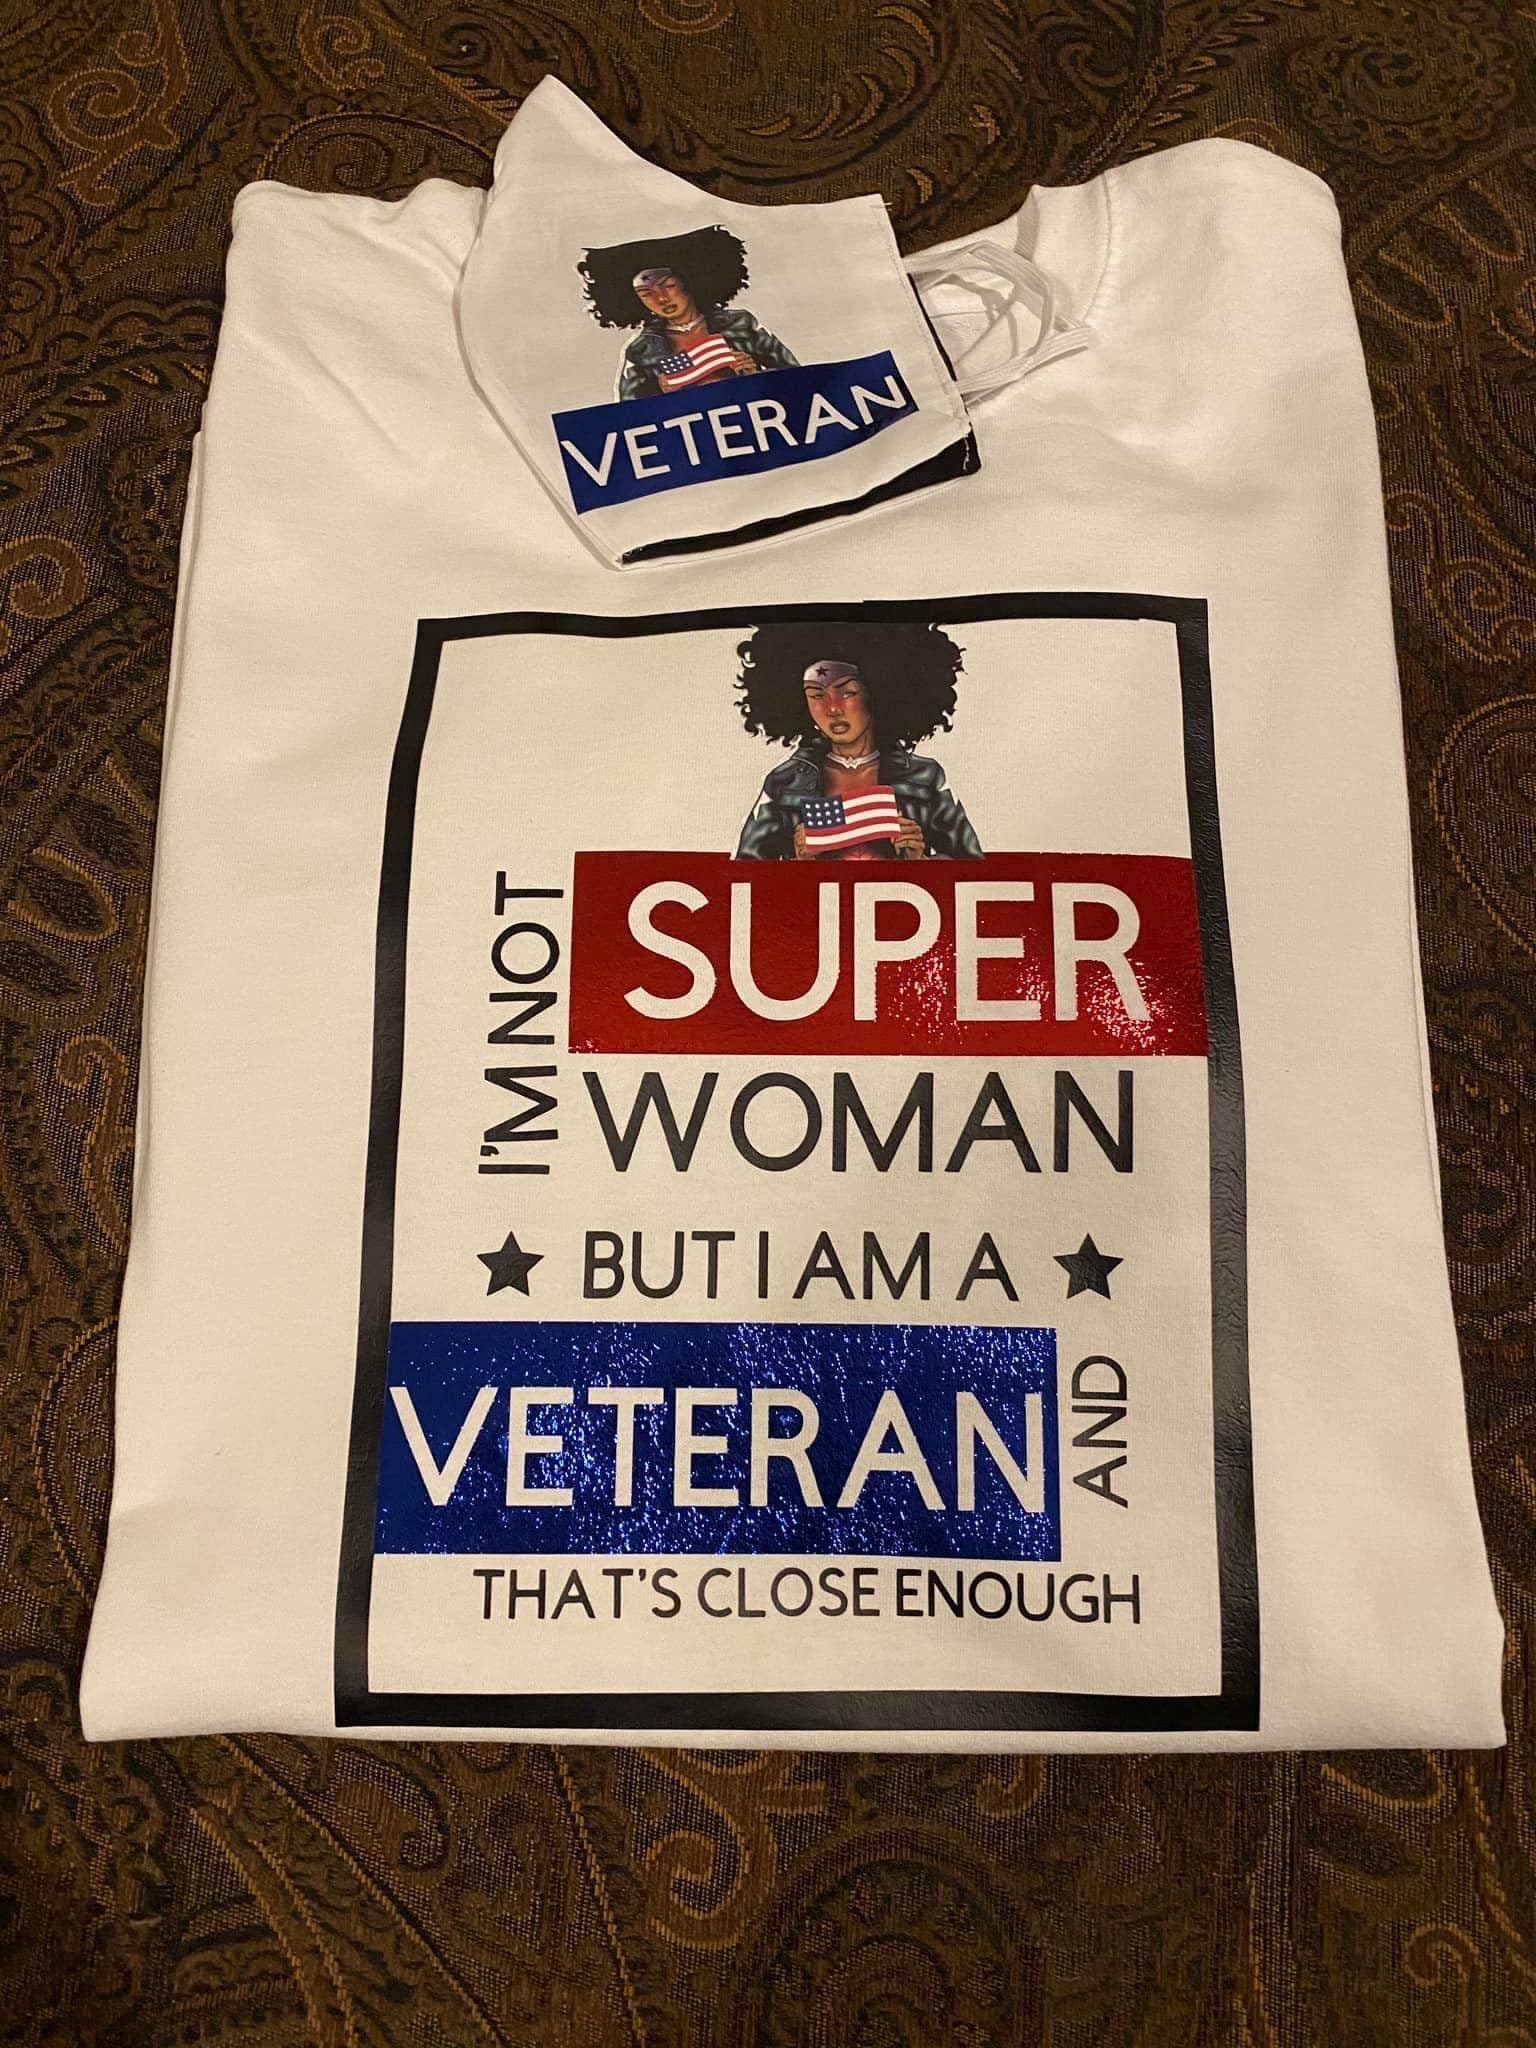 Veteran superwoman set